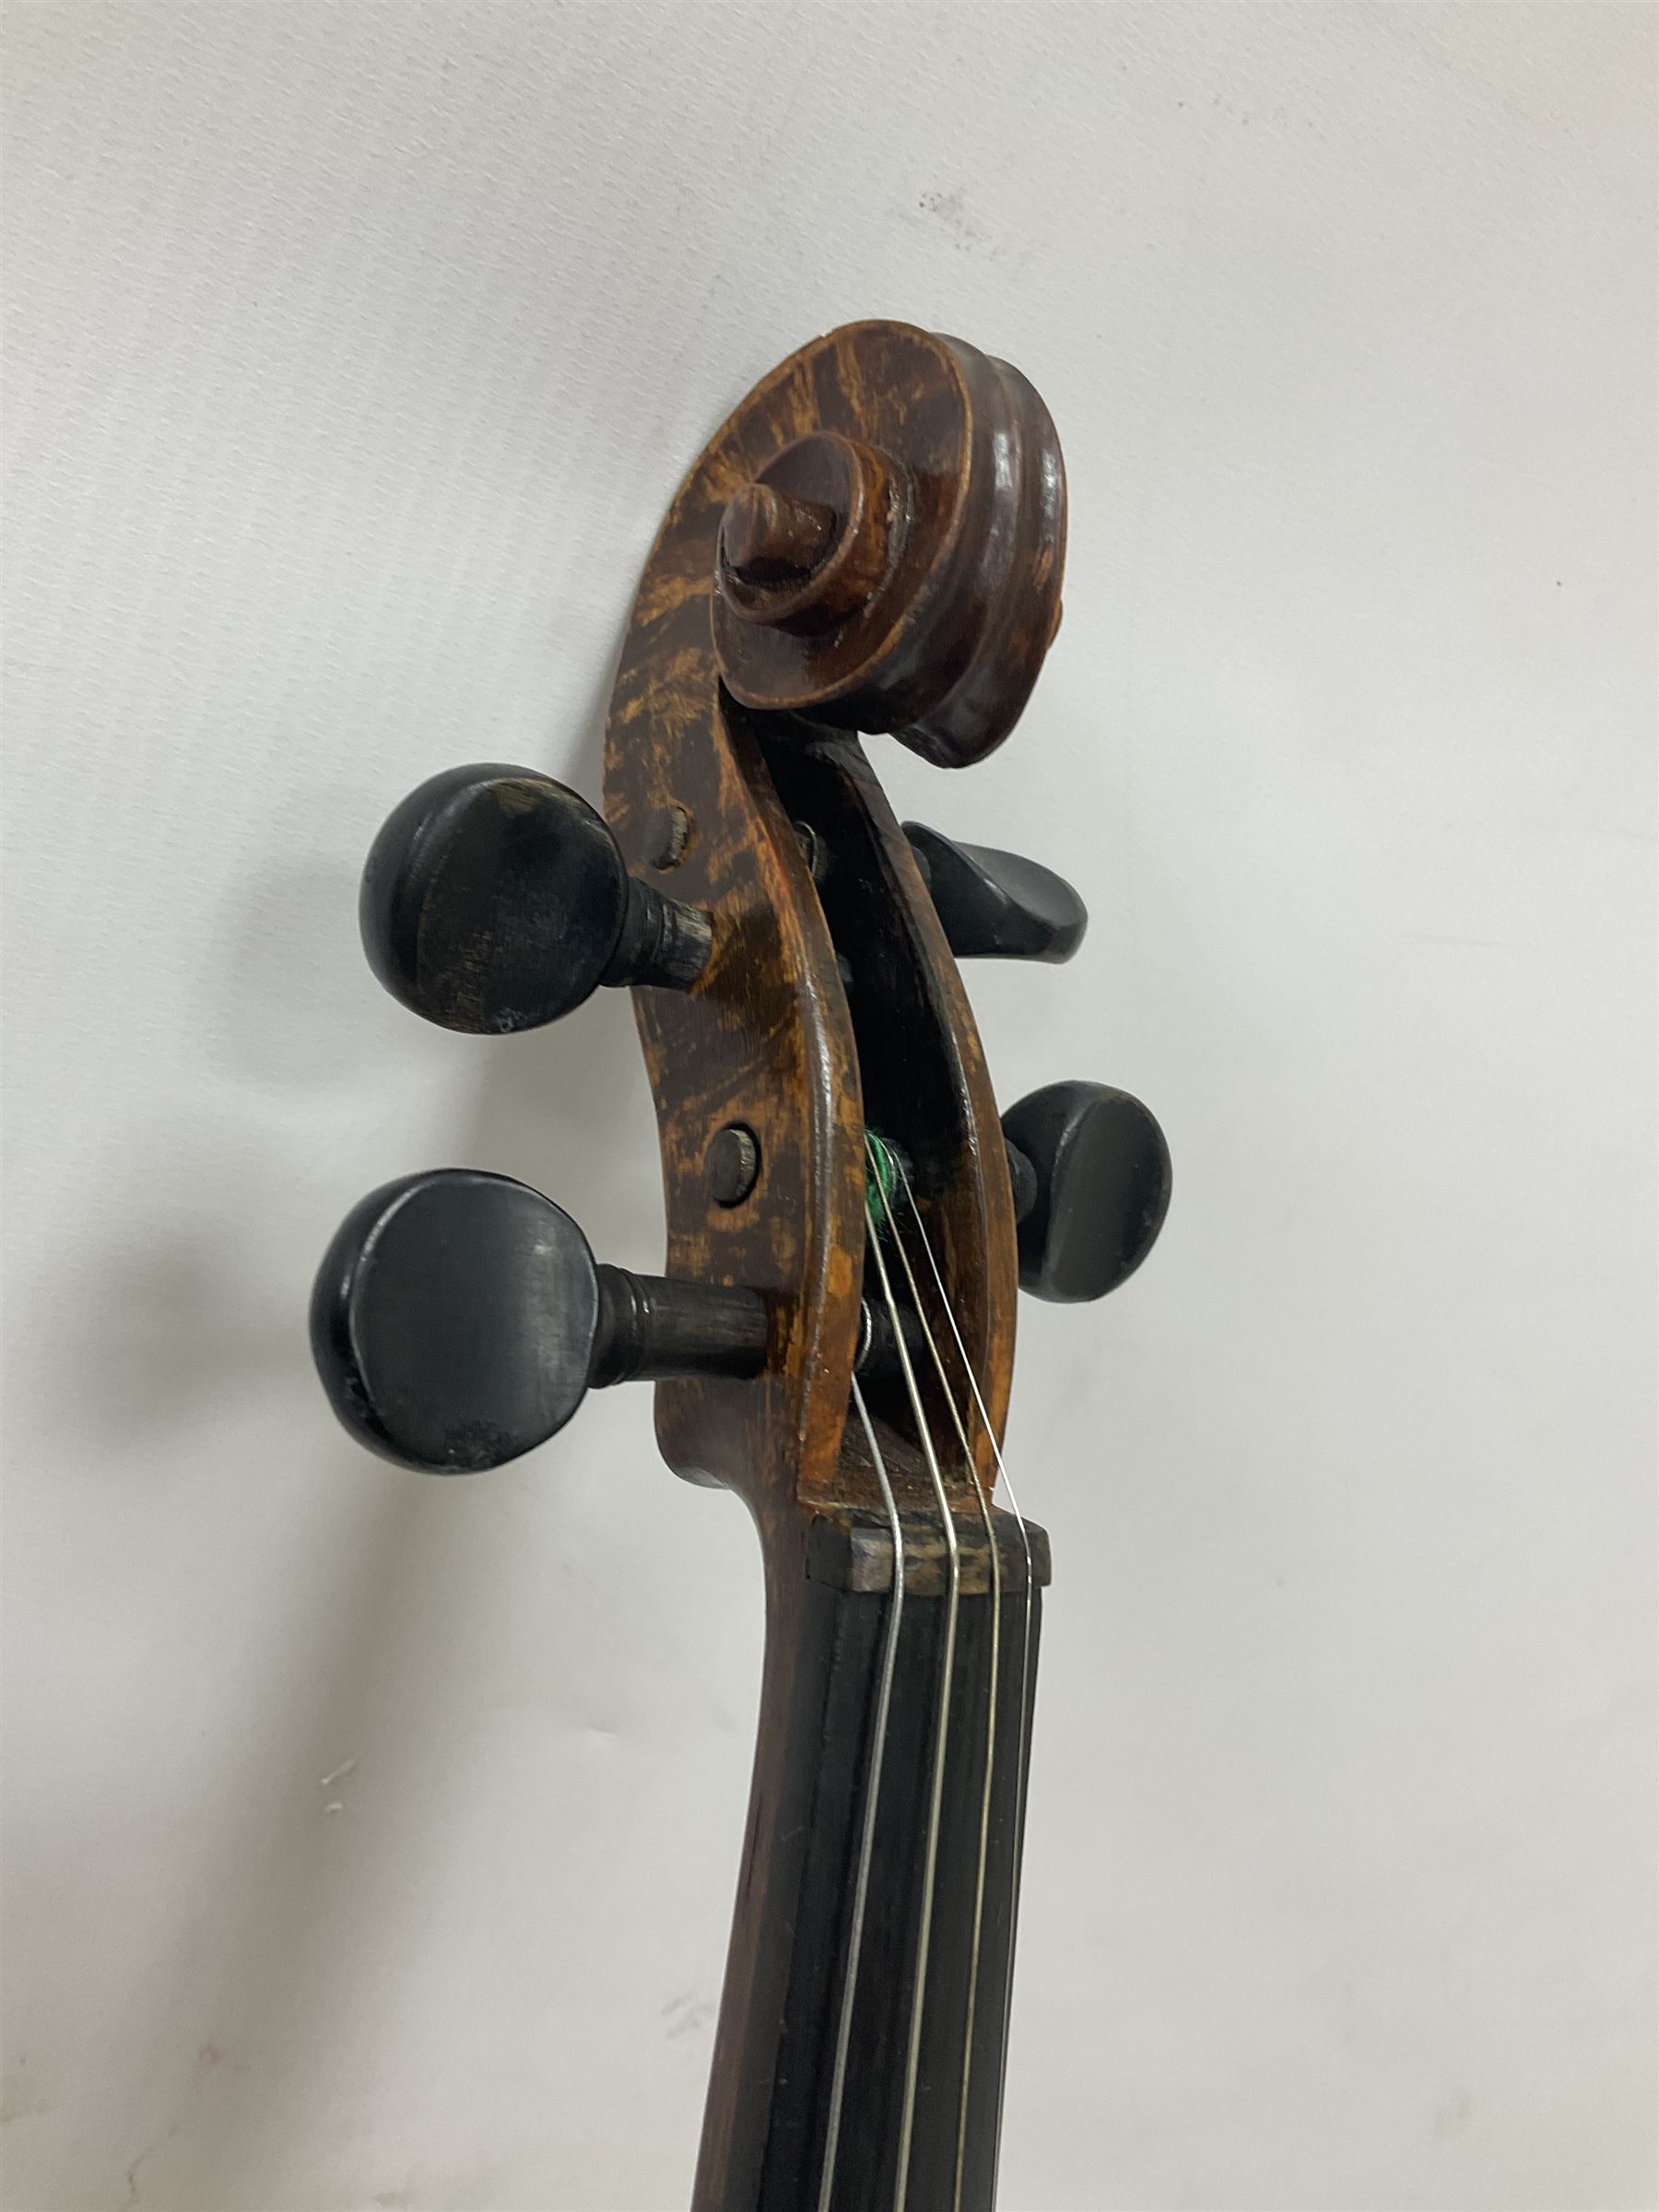 Copy of a full size Stradivarius violin - Image 6 of 12